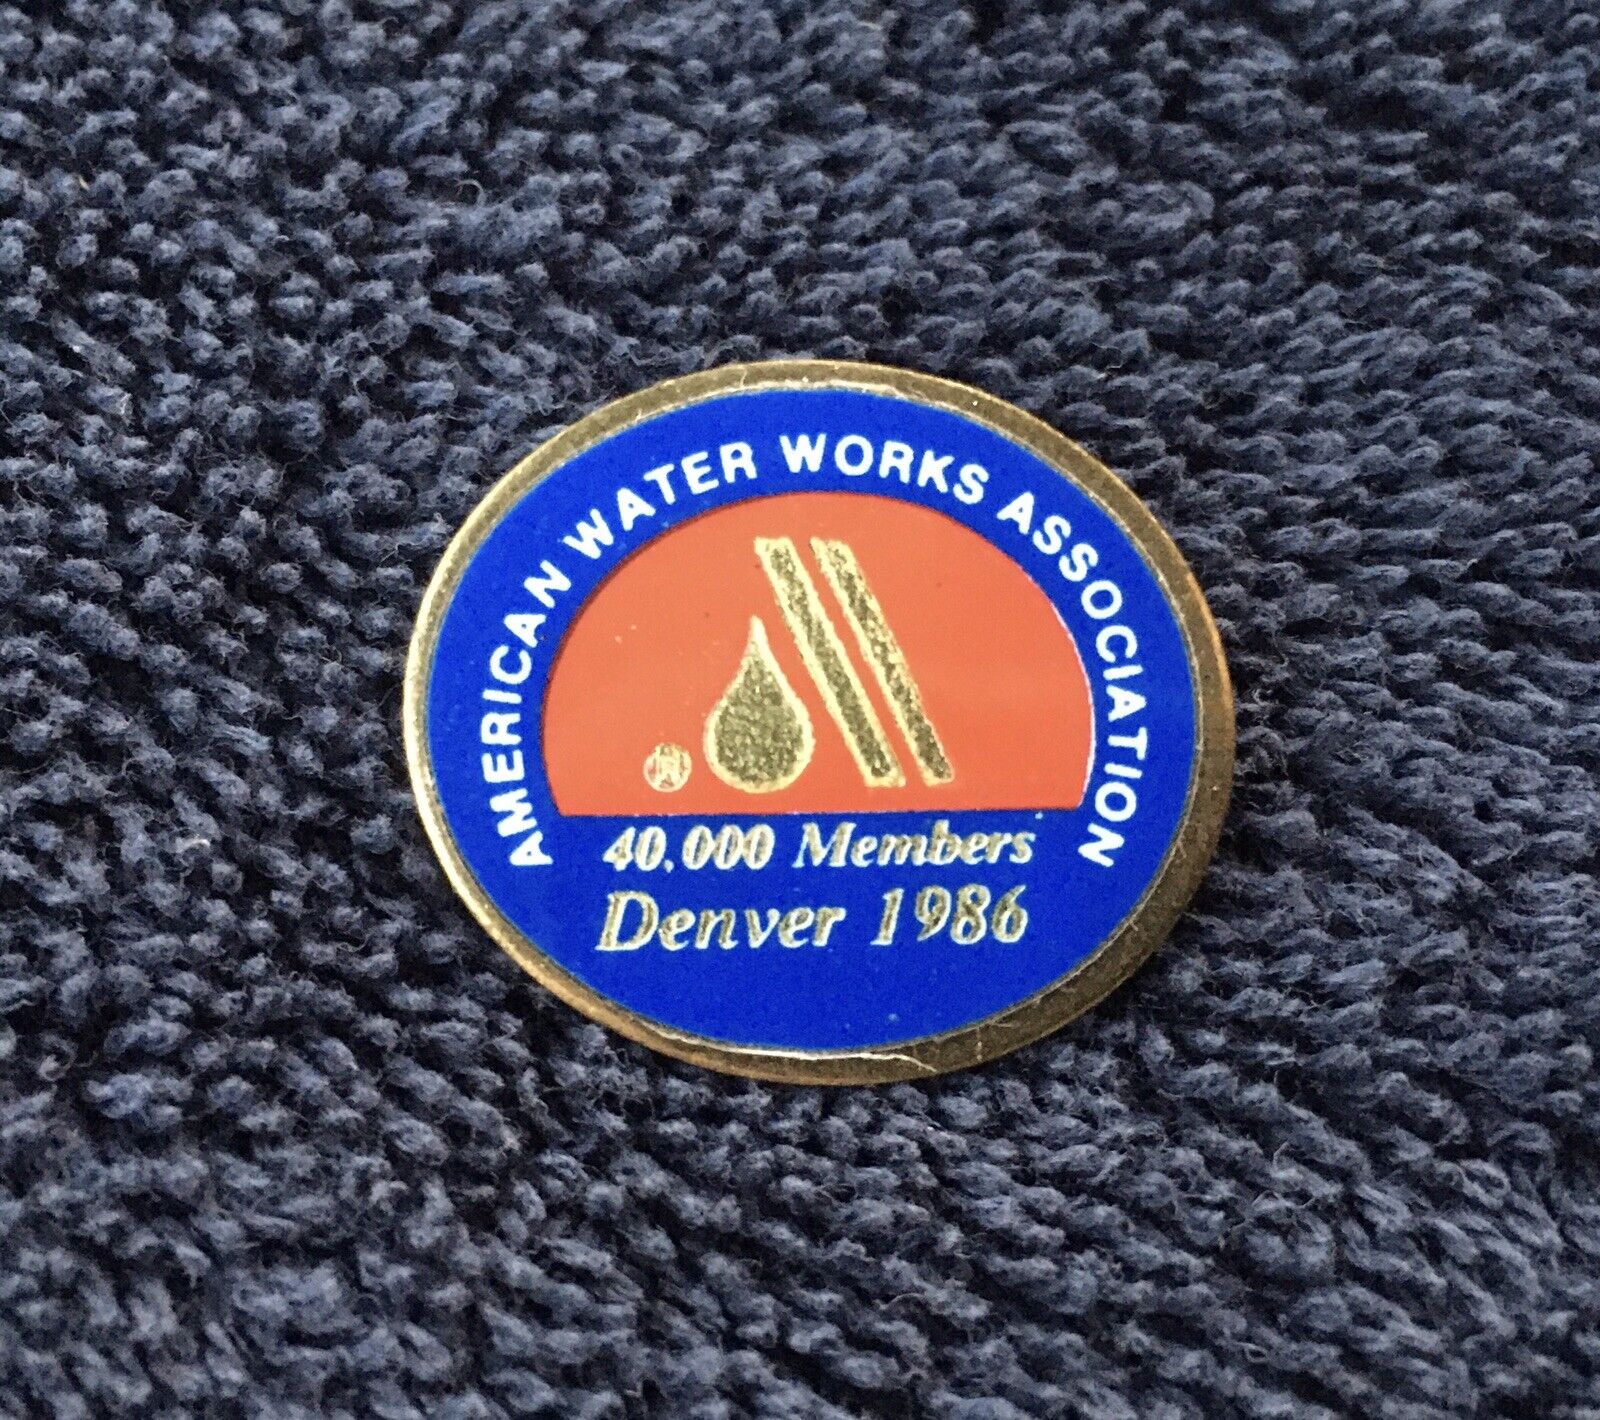 VTG 1986 American Water Works Association Denver 40000 Members Lapel Pin 1”x7/8”